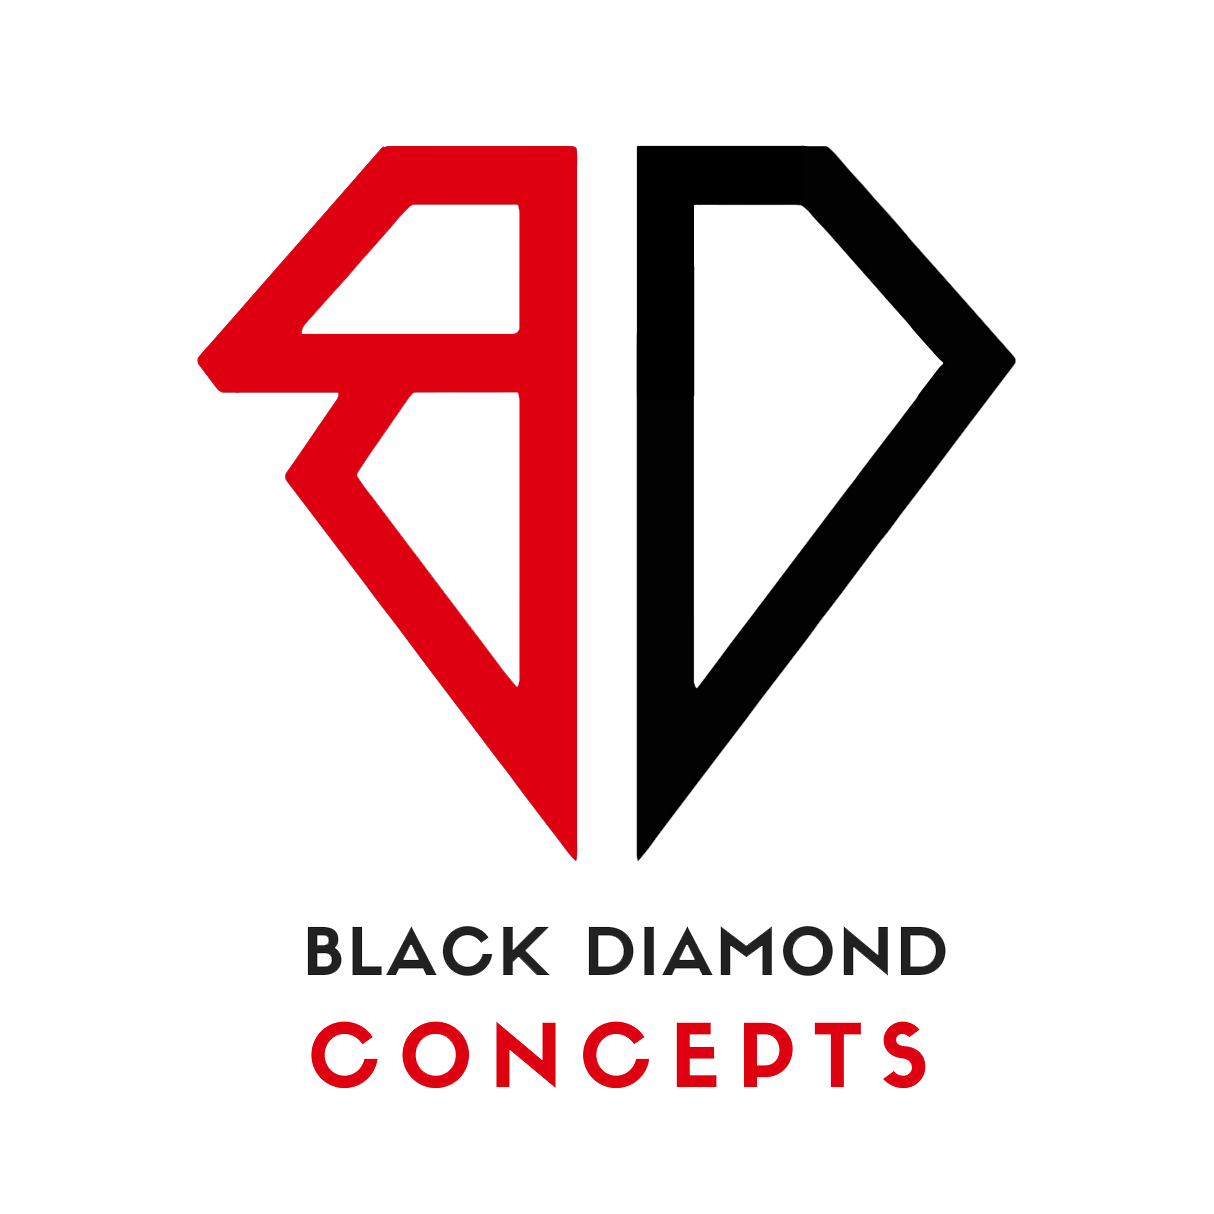 Red and Black Diamond Logo - Home - Black Diamond Concepts